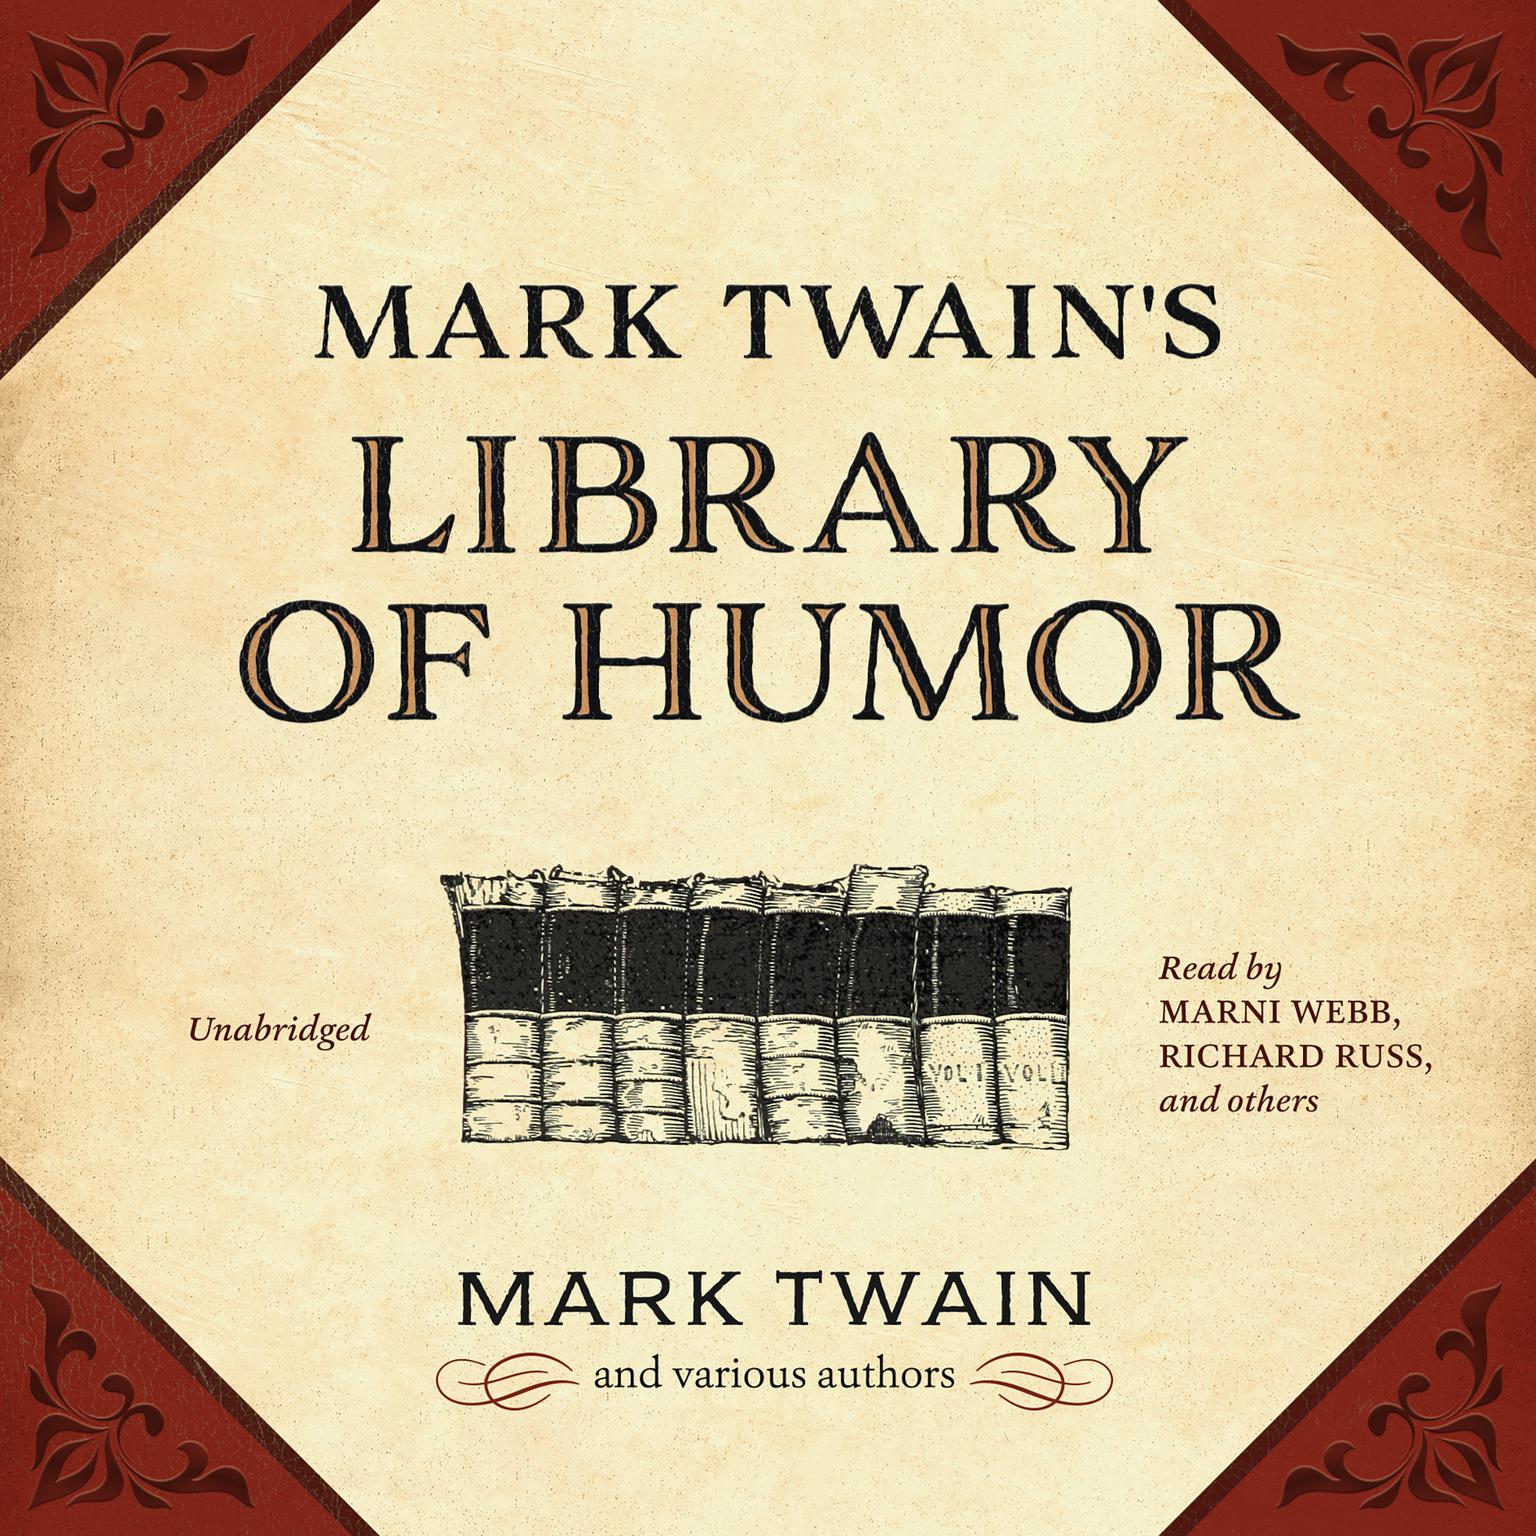 Mark Twain’s Library of Humor Audiobook, by Mark Twain